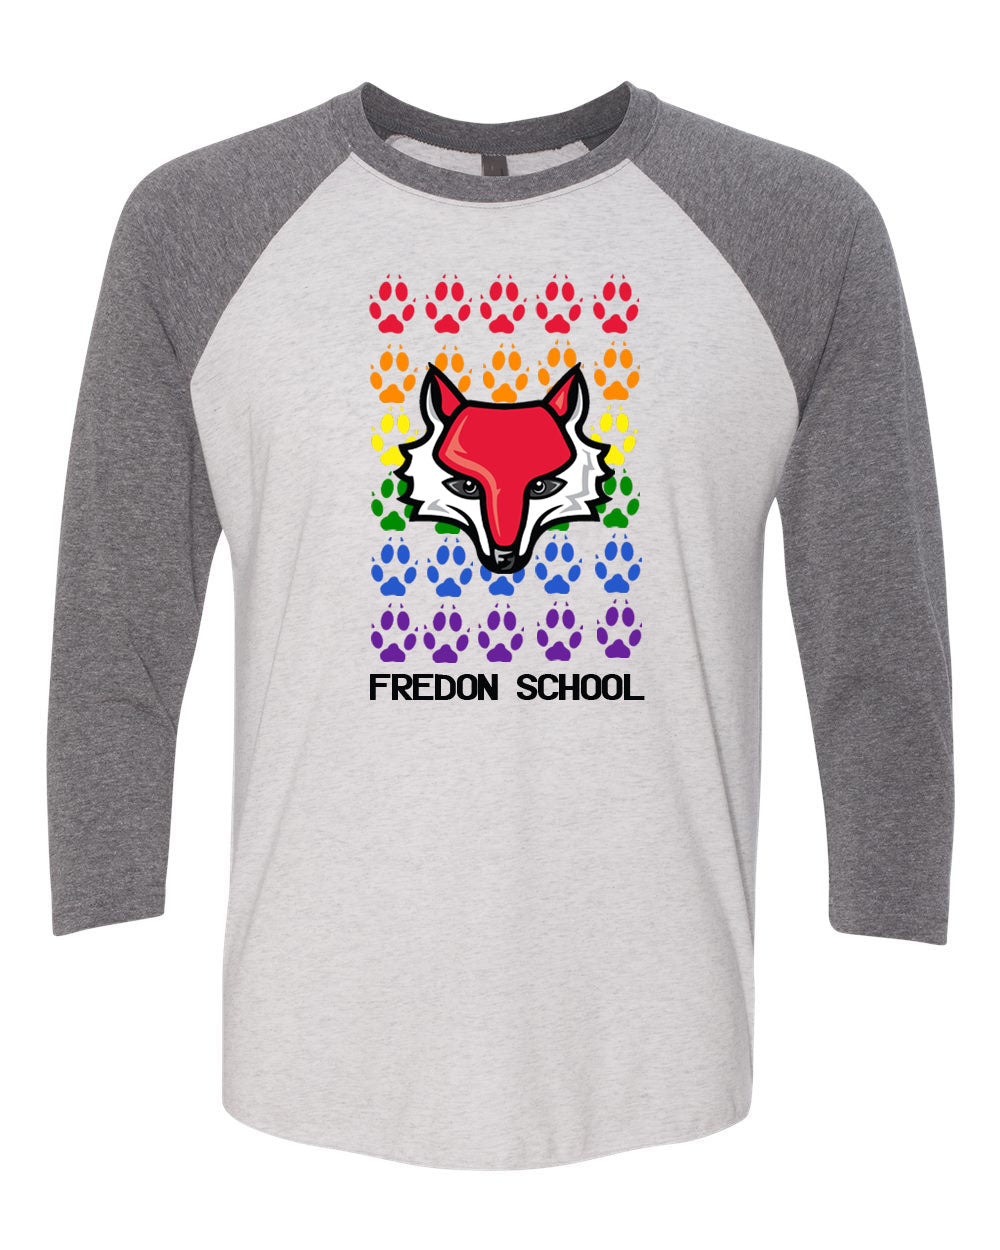 Fredon design 3 raglan shirt